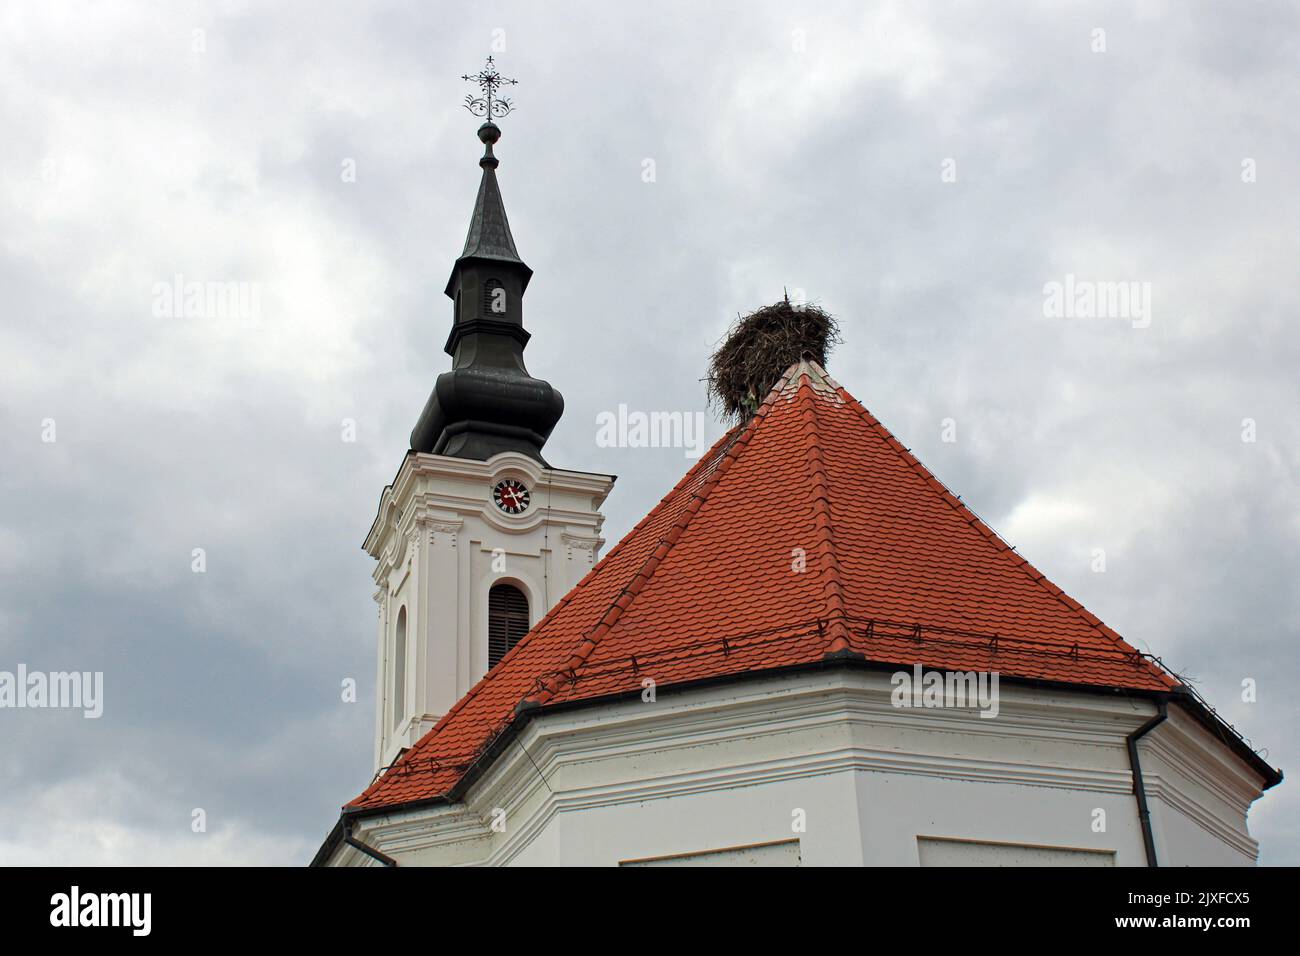 Lugares famosos, la iglesia de San Mateo con nido de cigüeña, Stitar, Eslavonia, Croacia Foto de stock